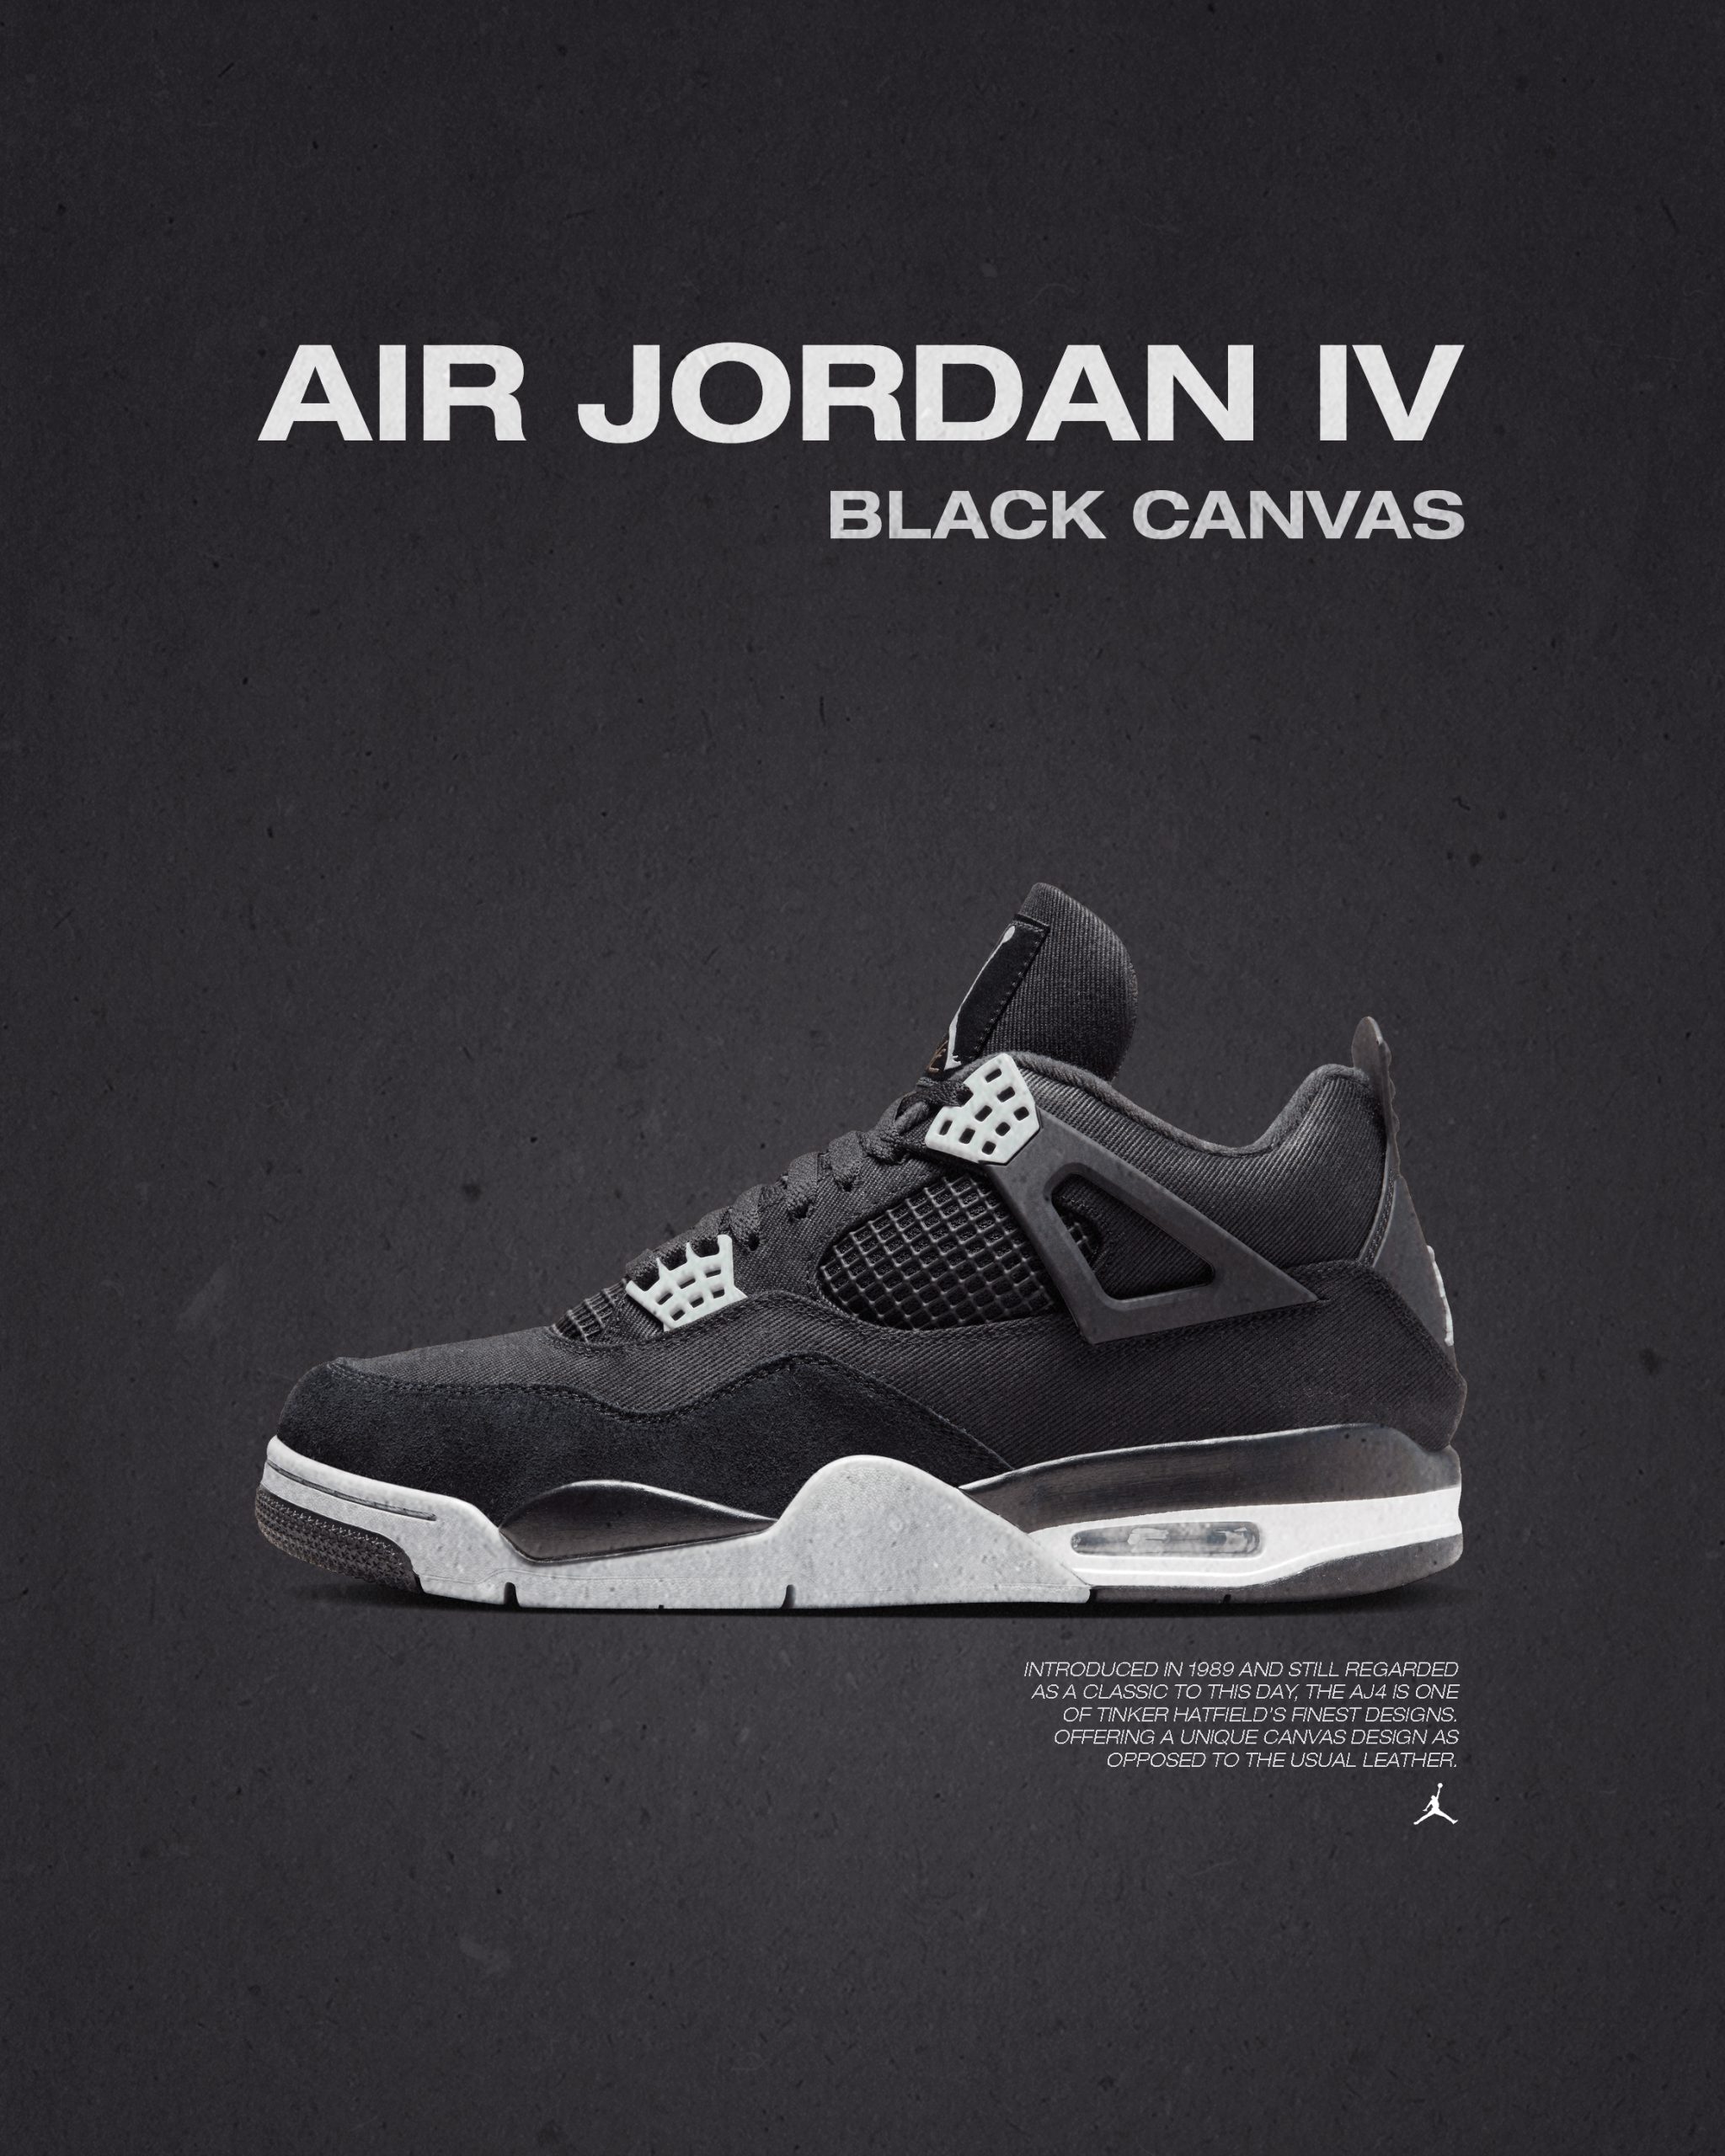 Air Jordan 4 “Black Canvas” box opening - LIVE 